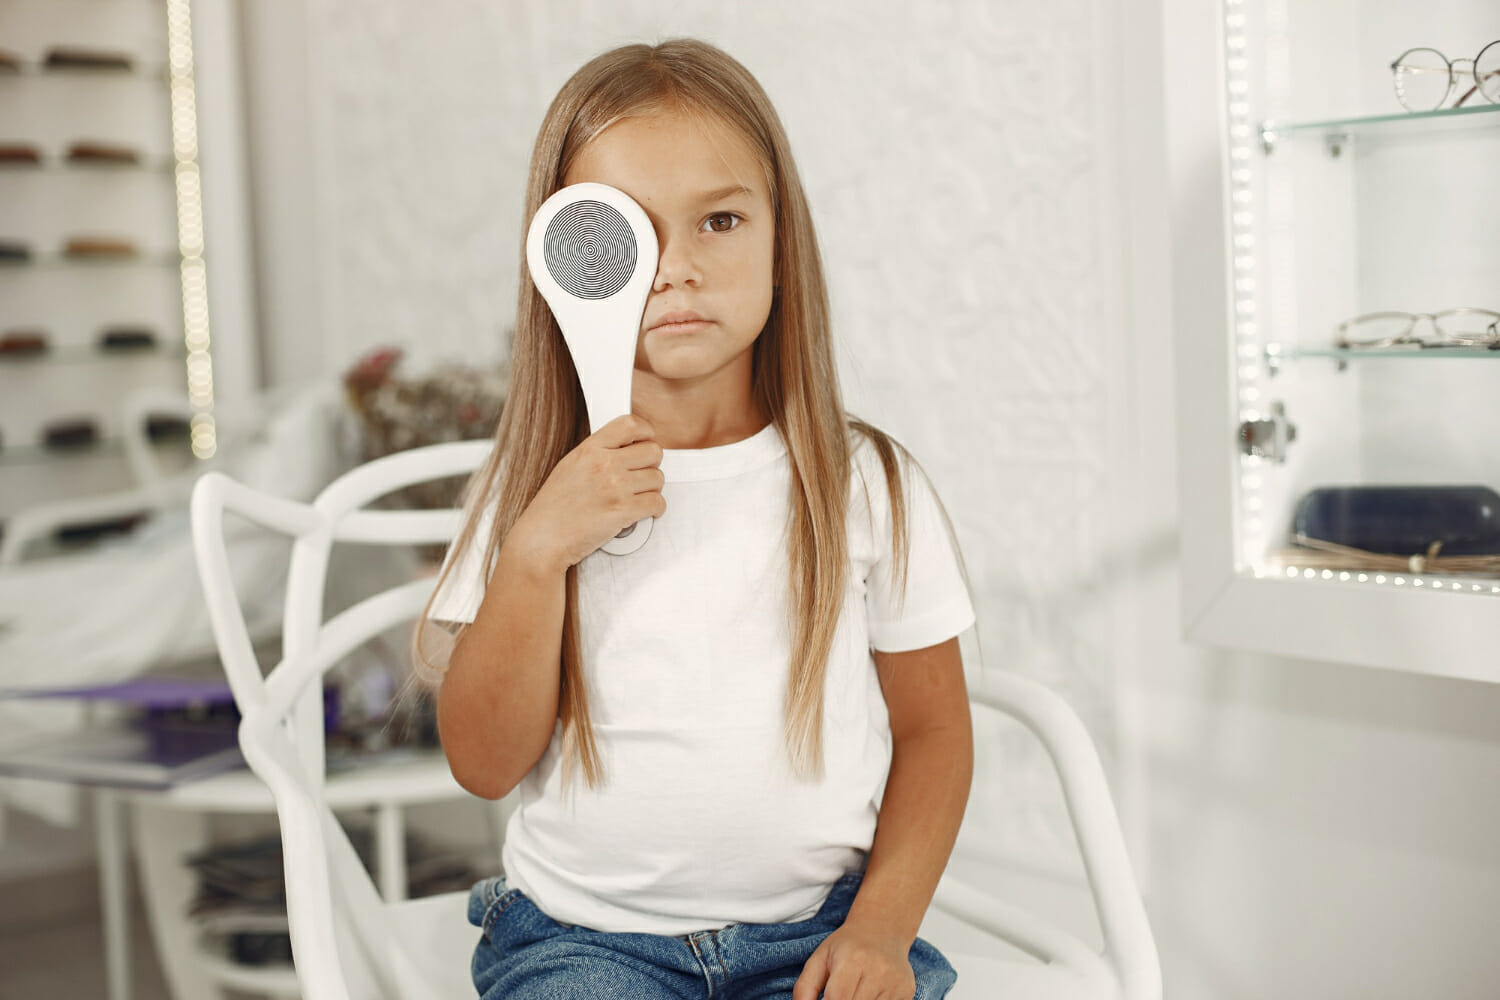 child-eye-test-eye-exam-little-girl-having-eye-check-up-with-phoropter-eye-test-children (1)